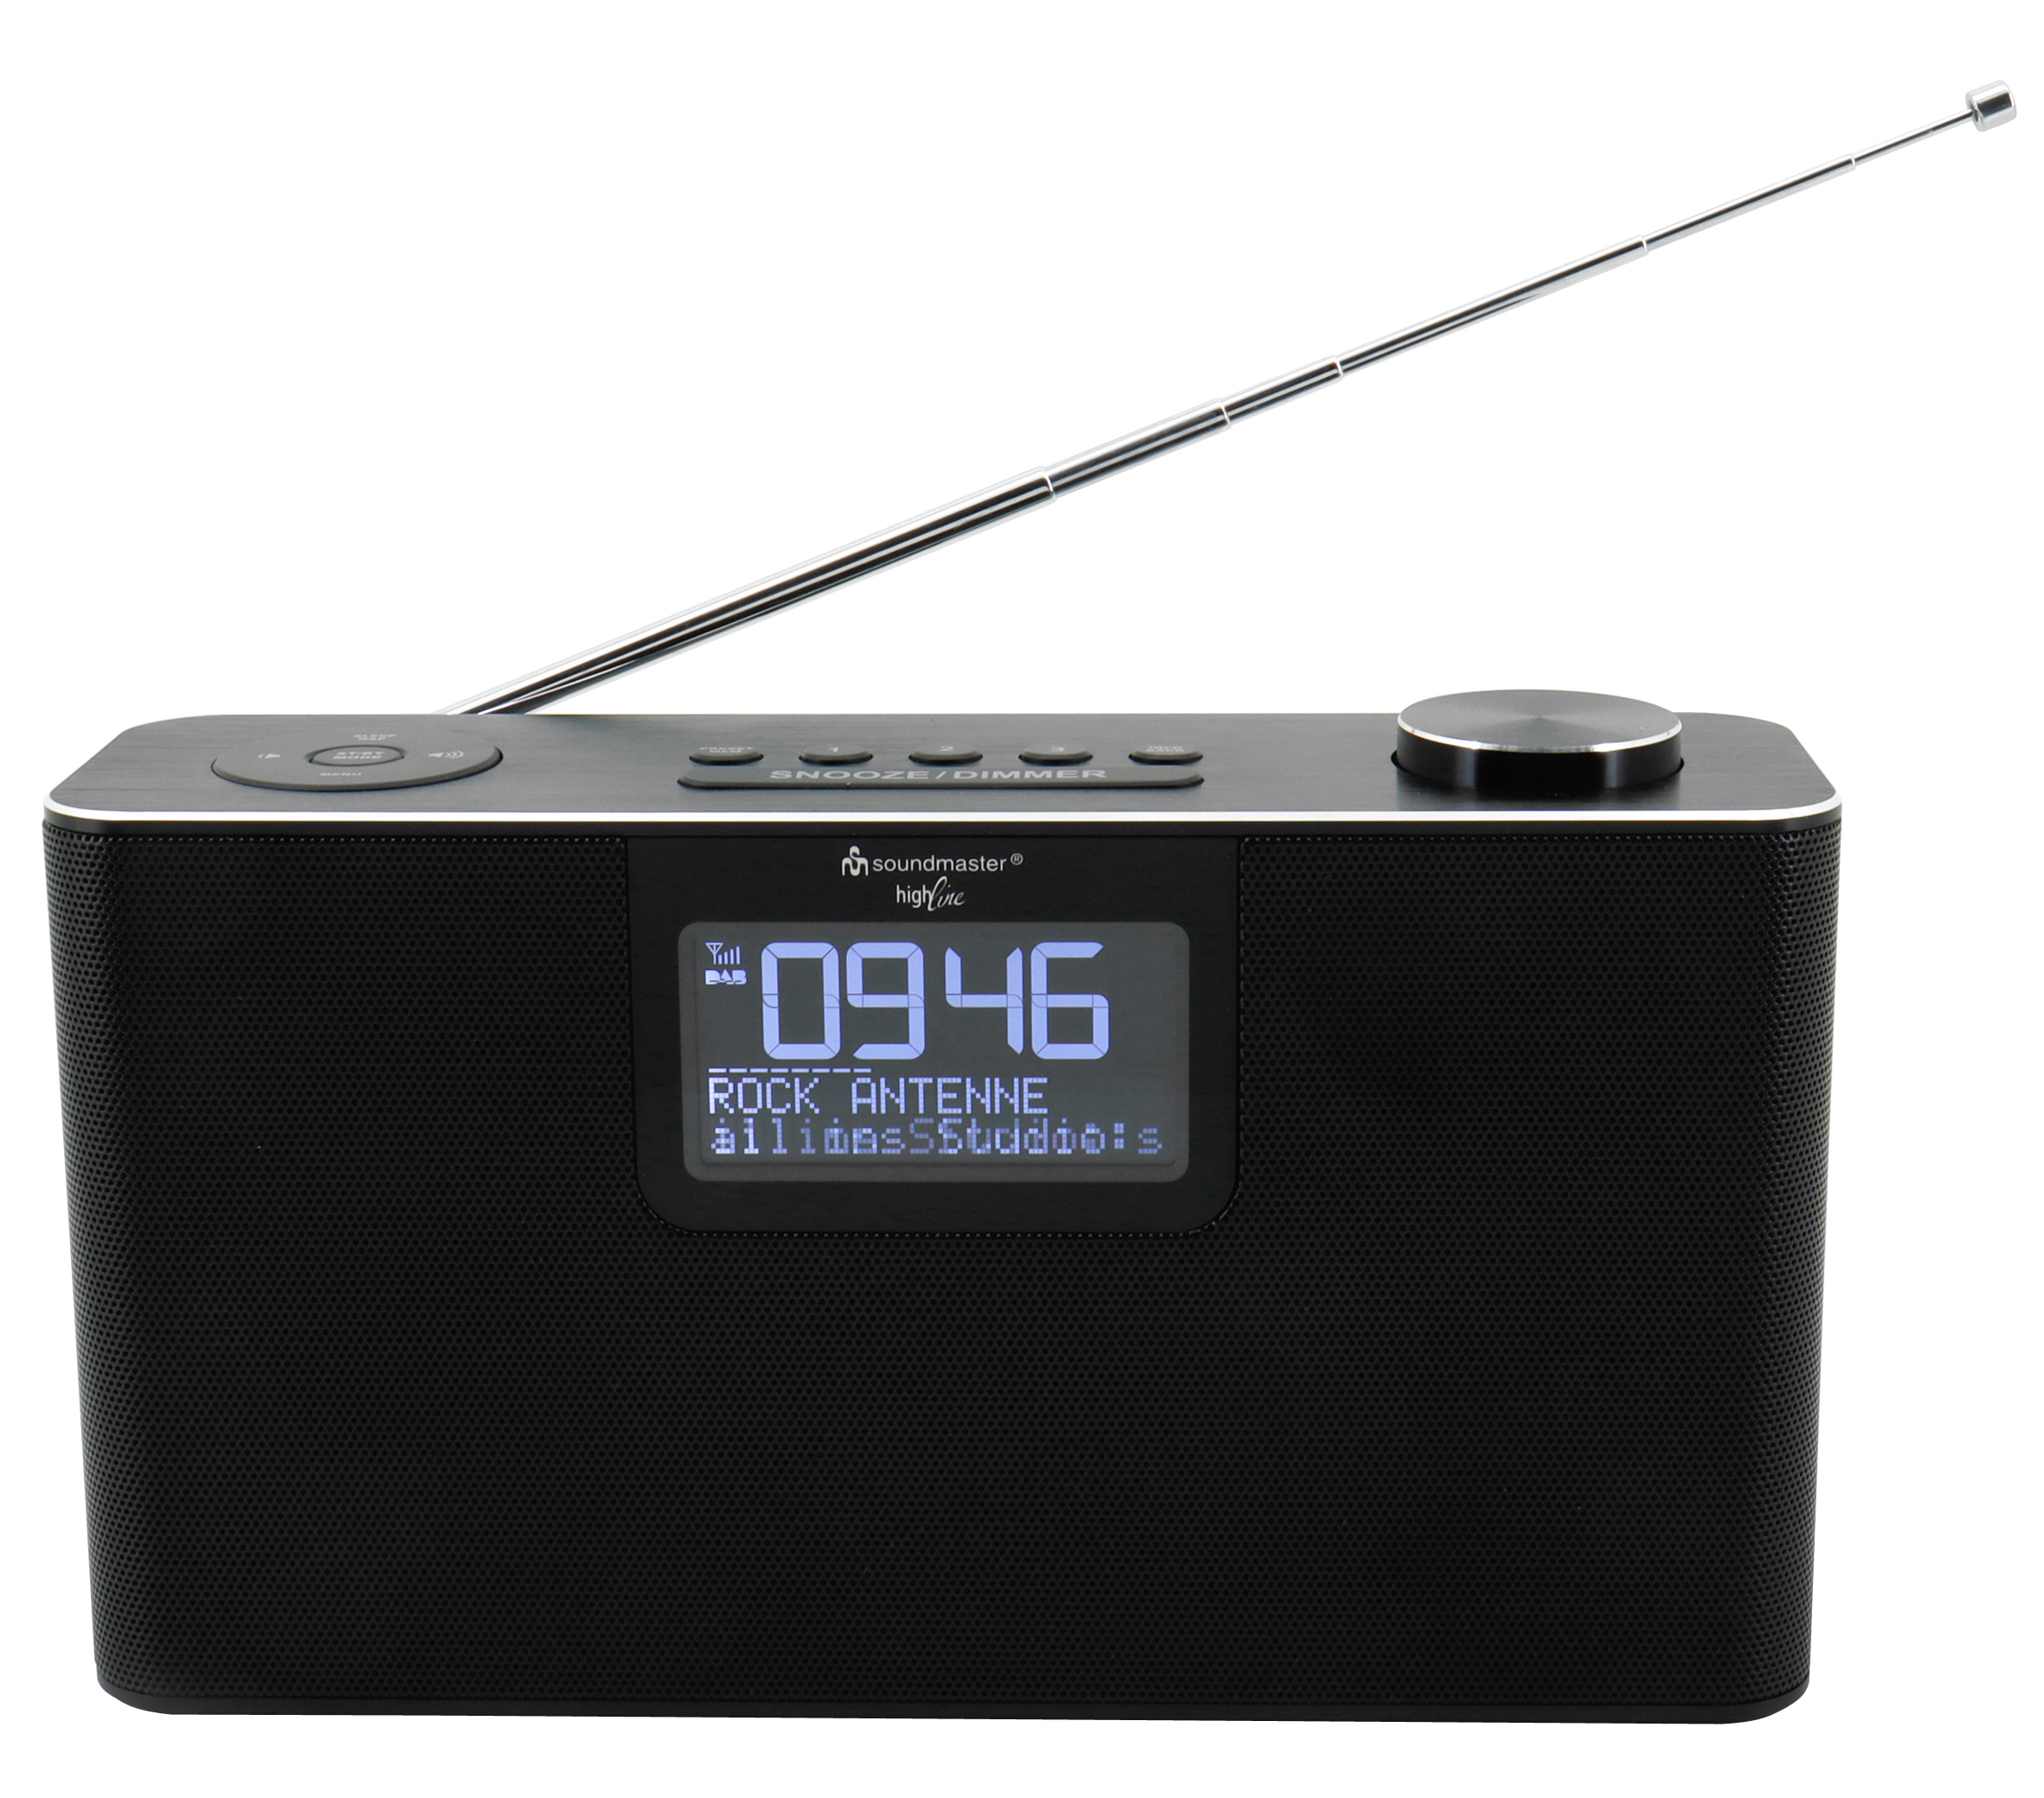 Stereo DAB+/FM radio with USB/Micro SD-MP3, Bluetooth®